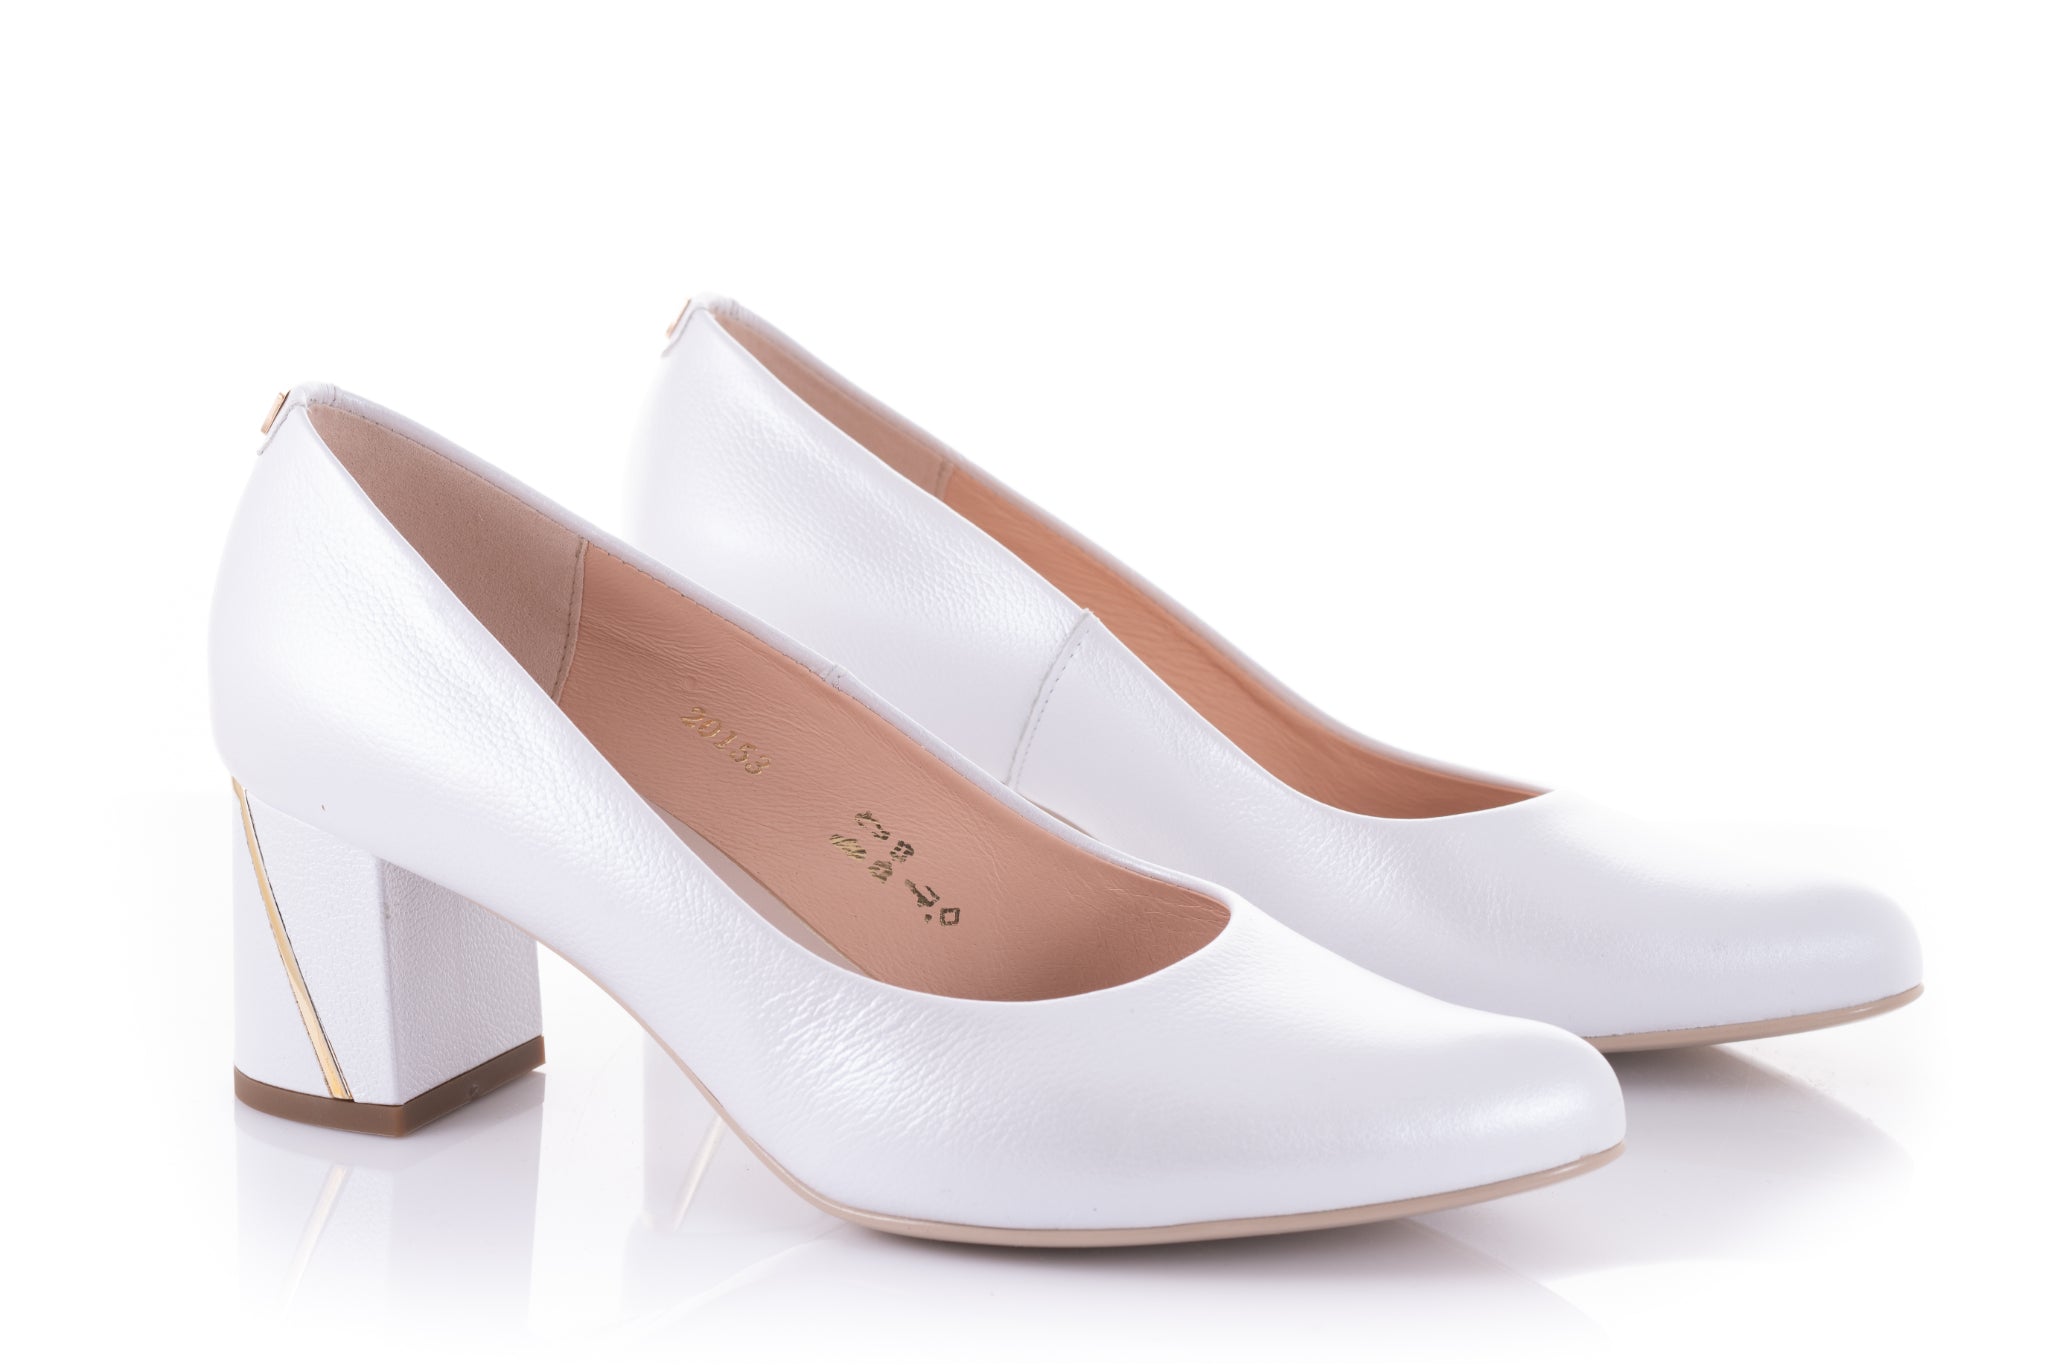 Pantofi dama eleganti piele naturala 20153 alb